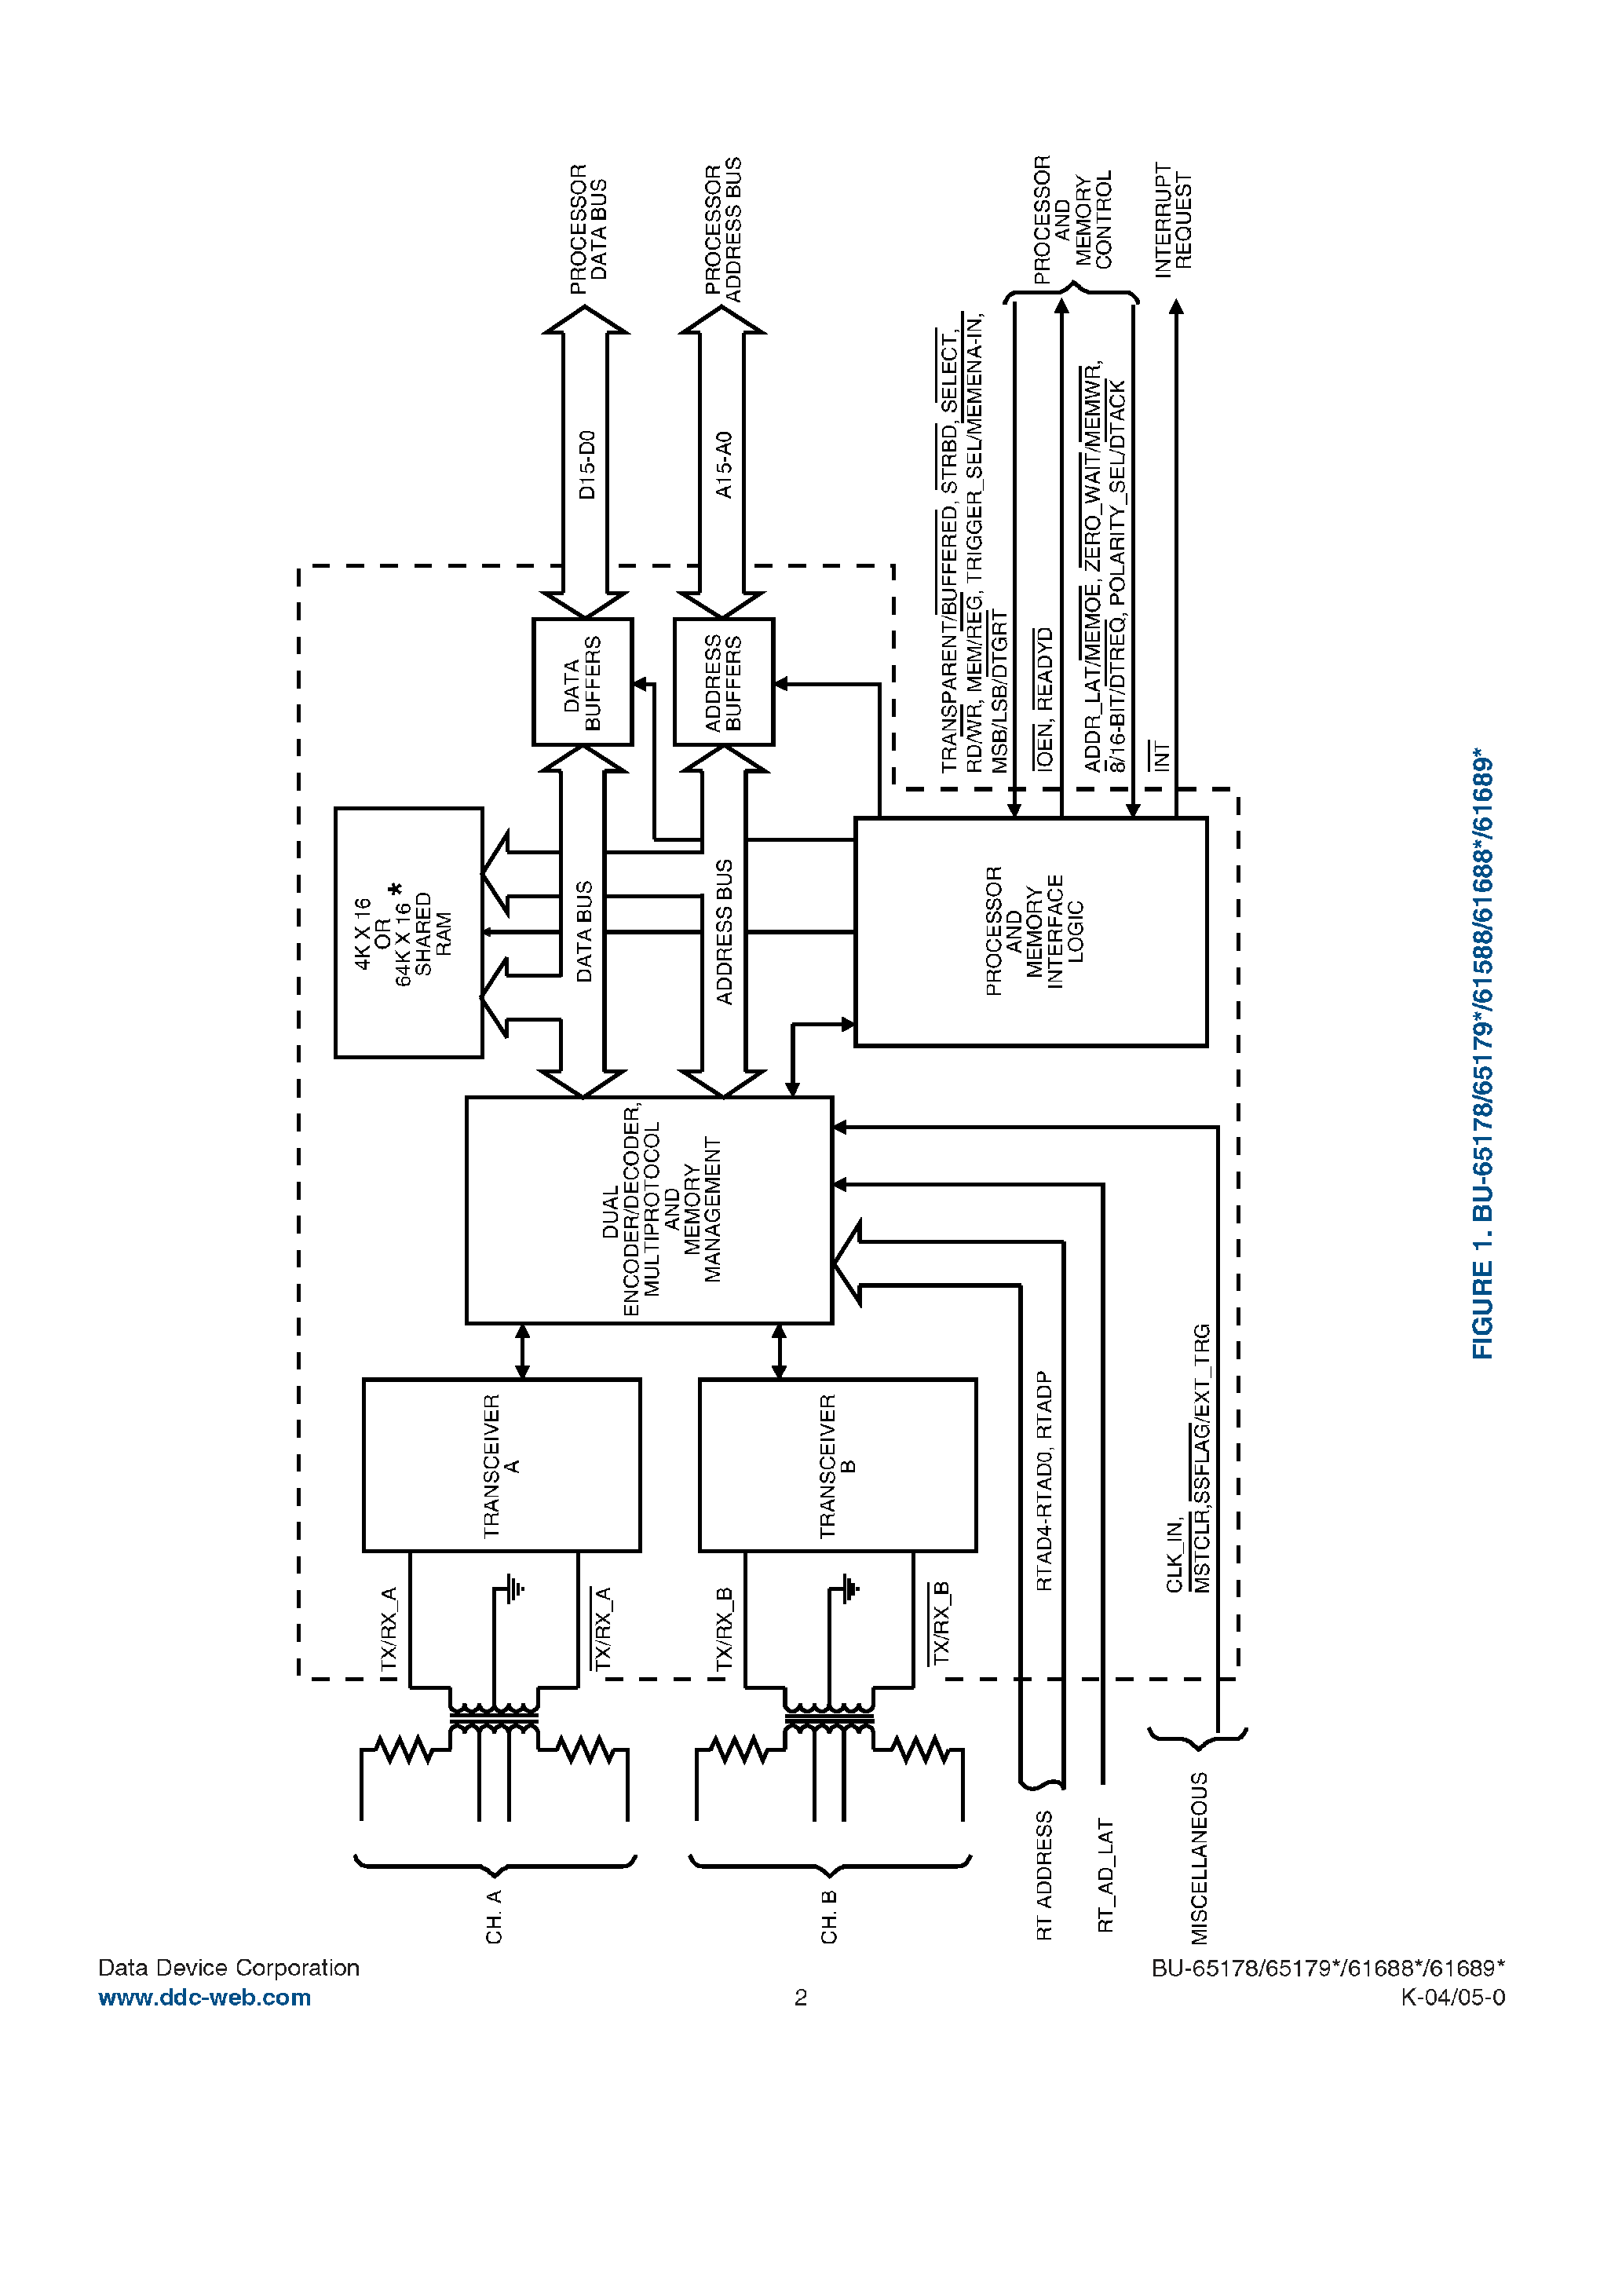 Даташит BU-61588 - Miniature Advanced Communication Engine and Mini-Ace Plus страница 2